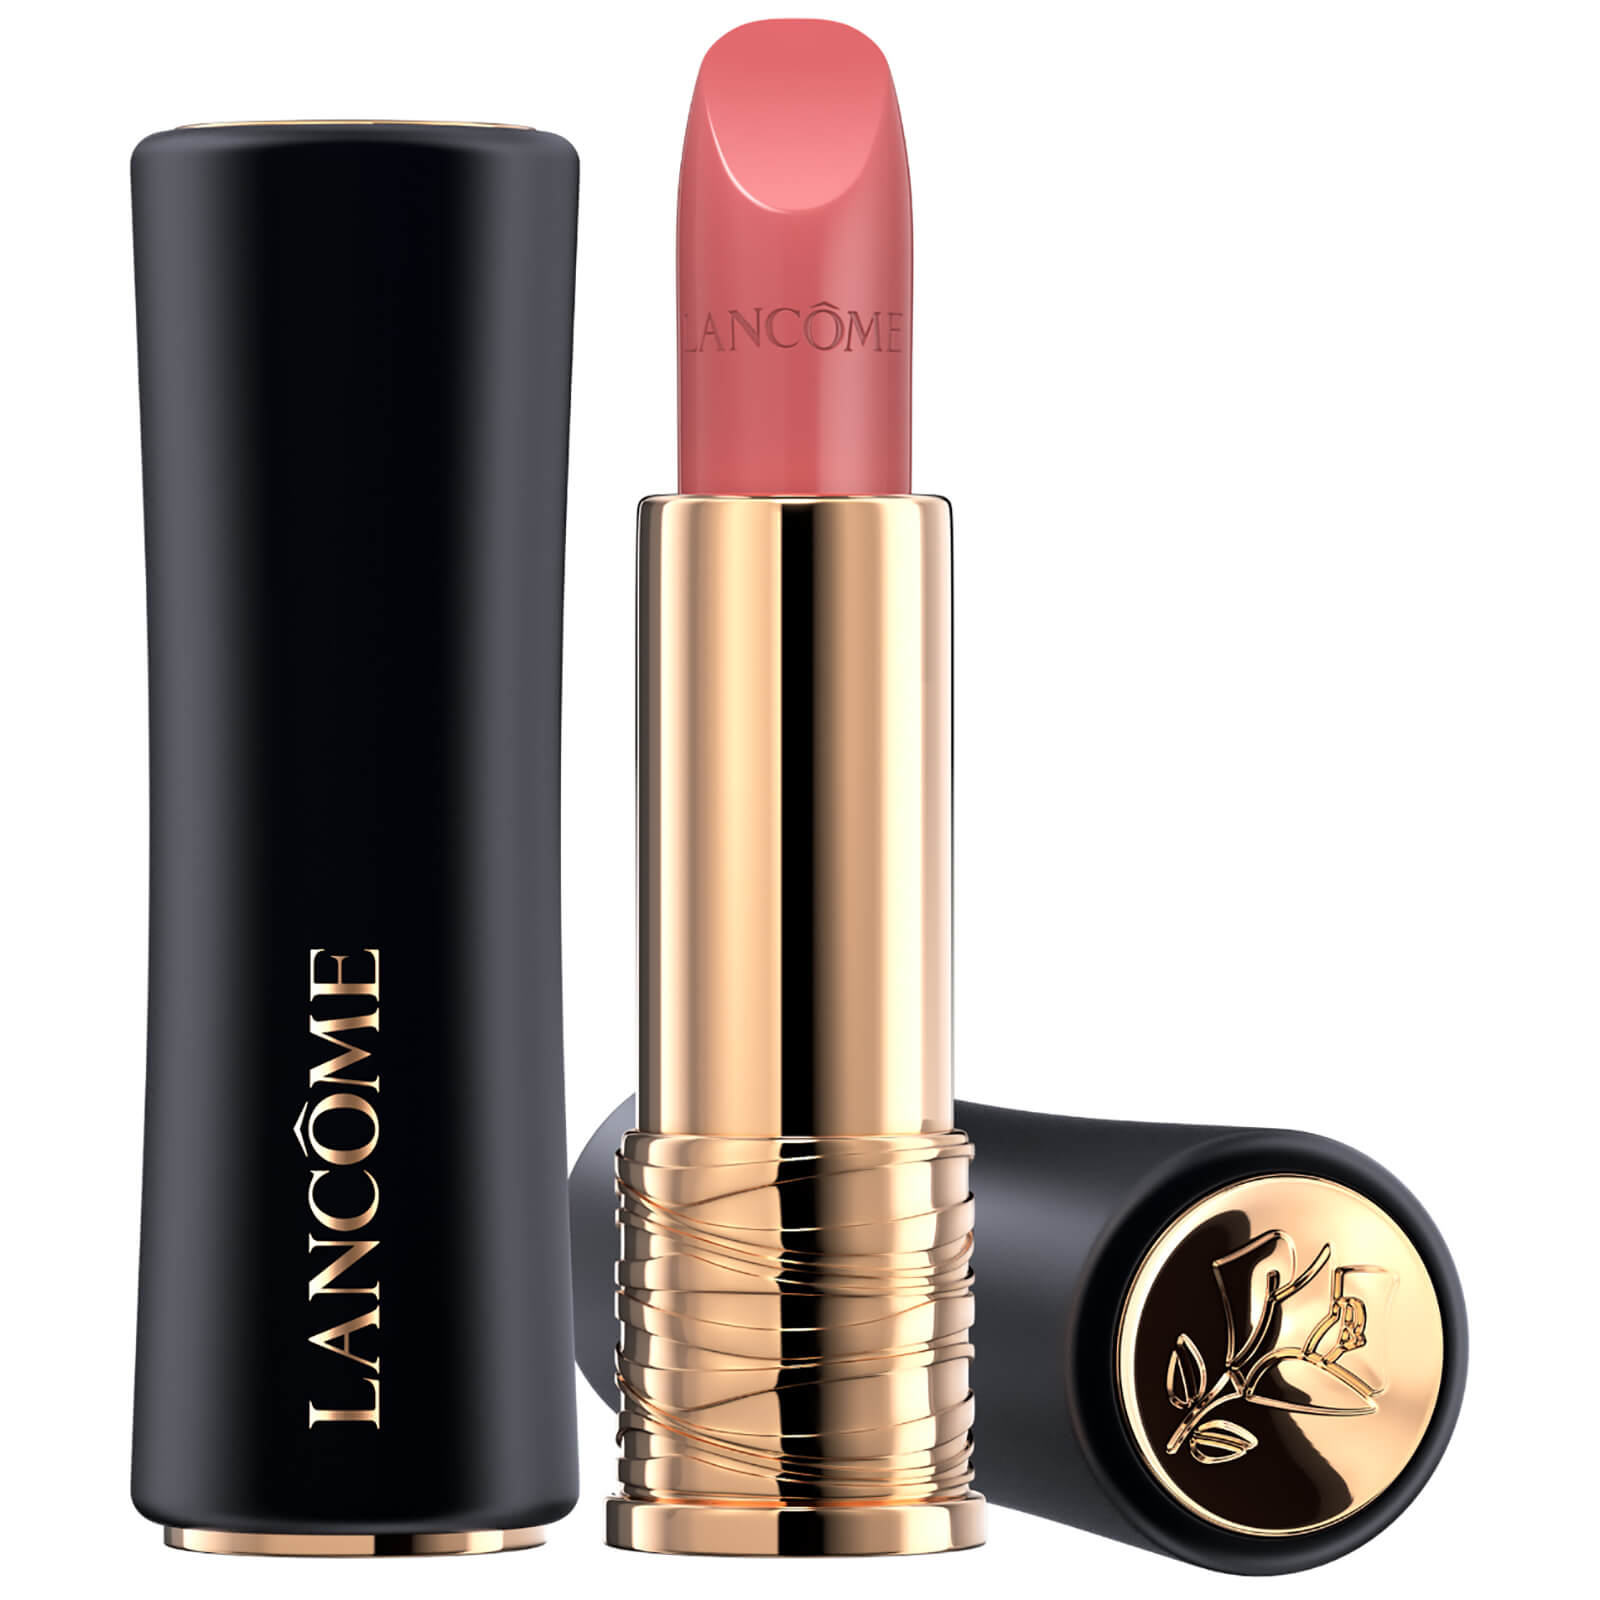 Lancôme L'Absolu Rouge Cream Lipstick 35ml (Various Shades) - 276 Timeless Romance